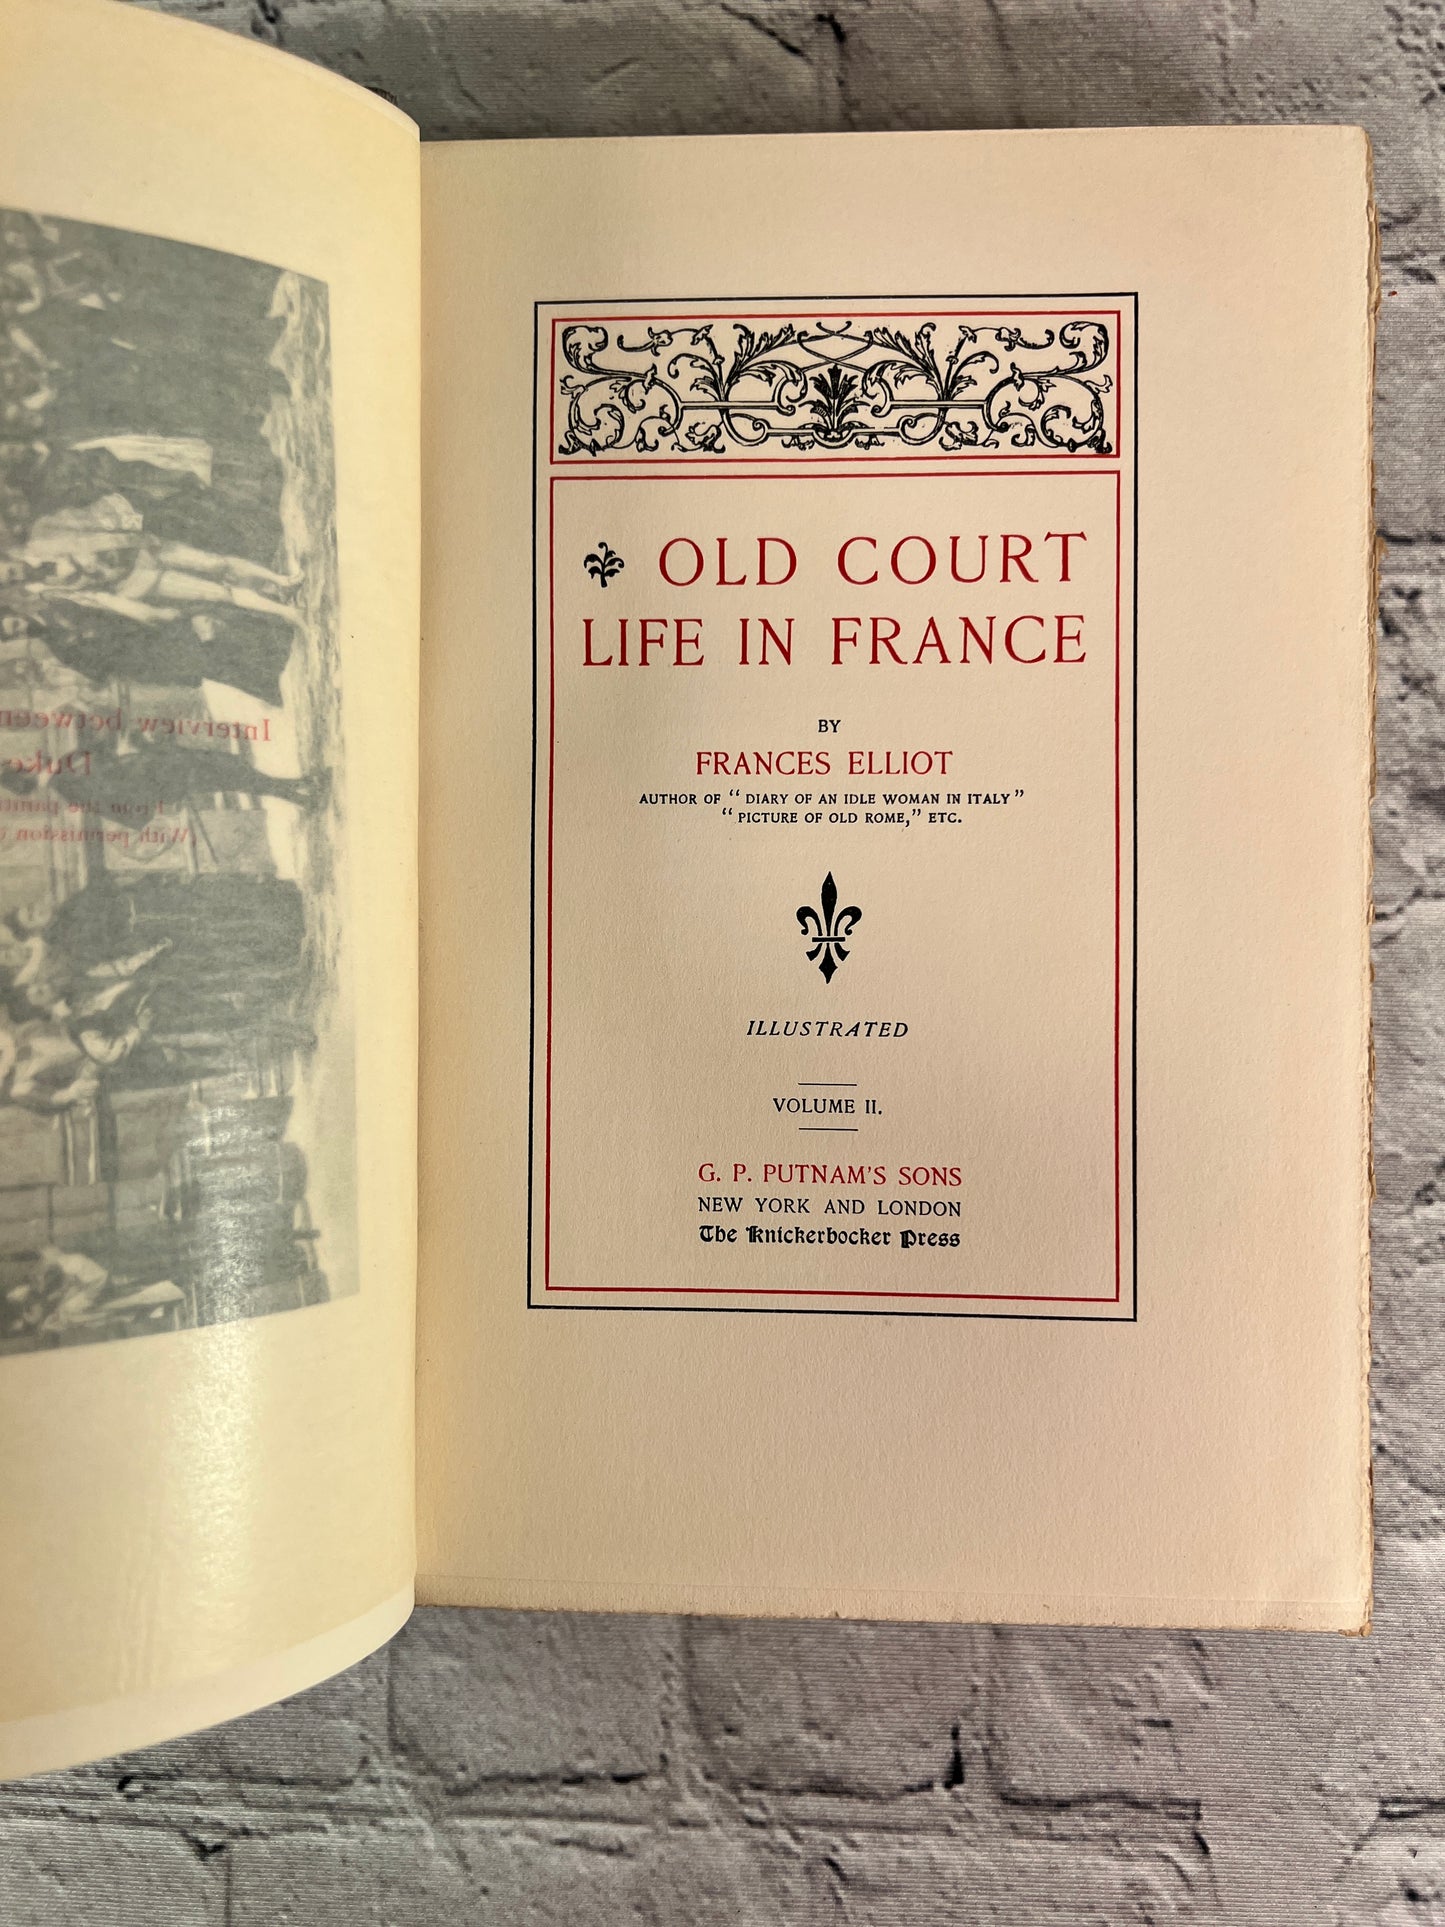 Old Court Life in France by Frances Elliot Volume II [1893]